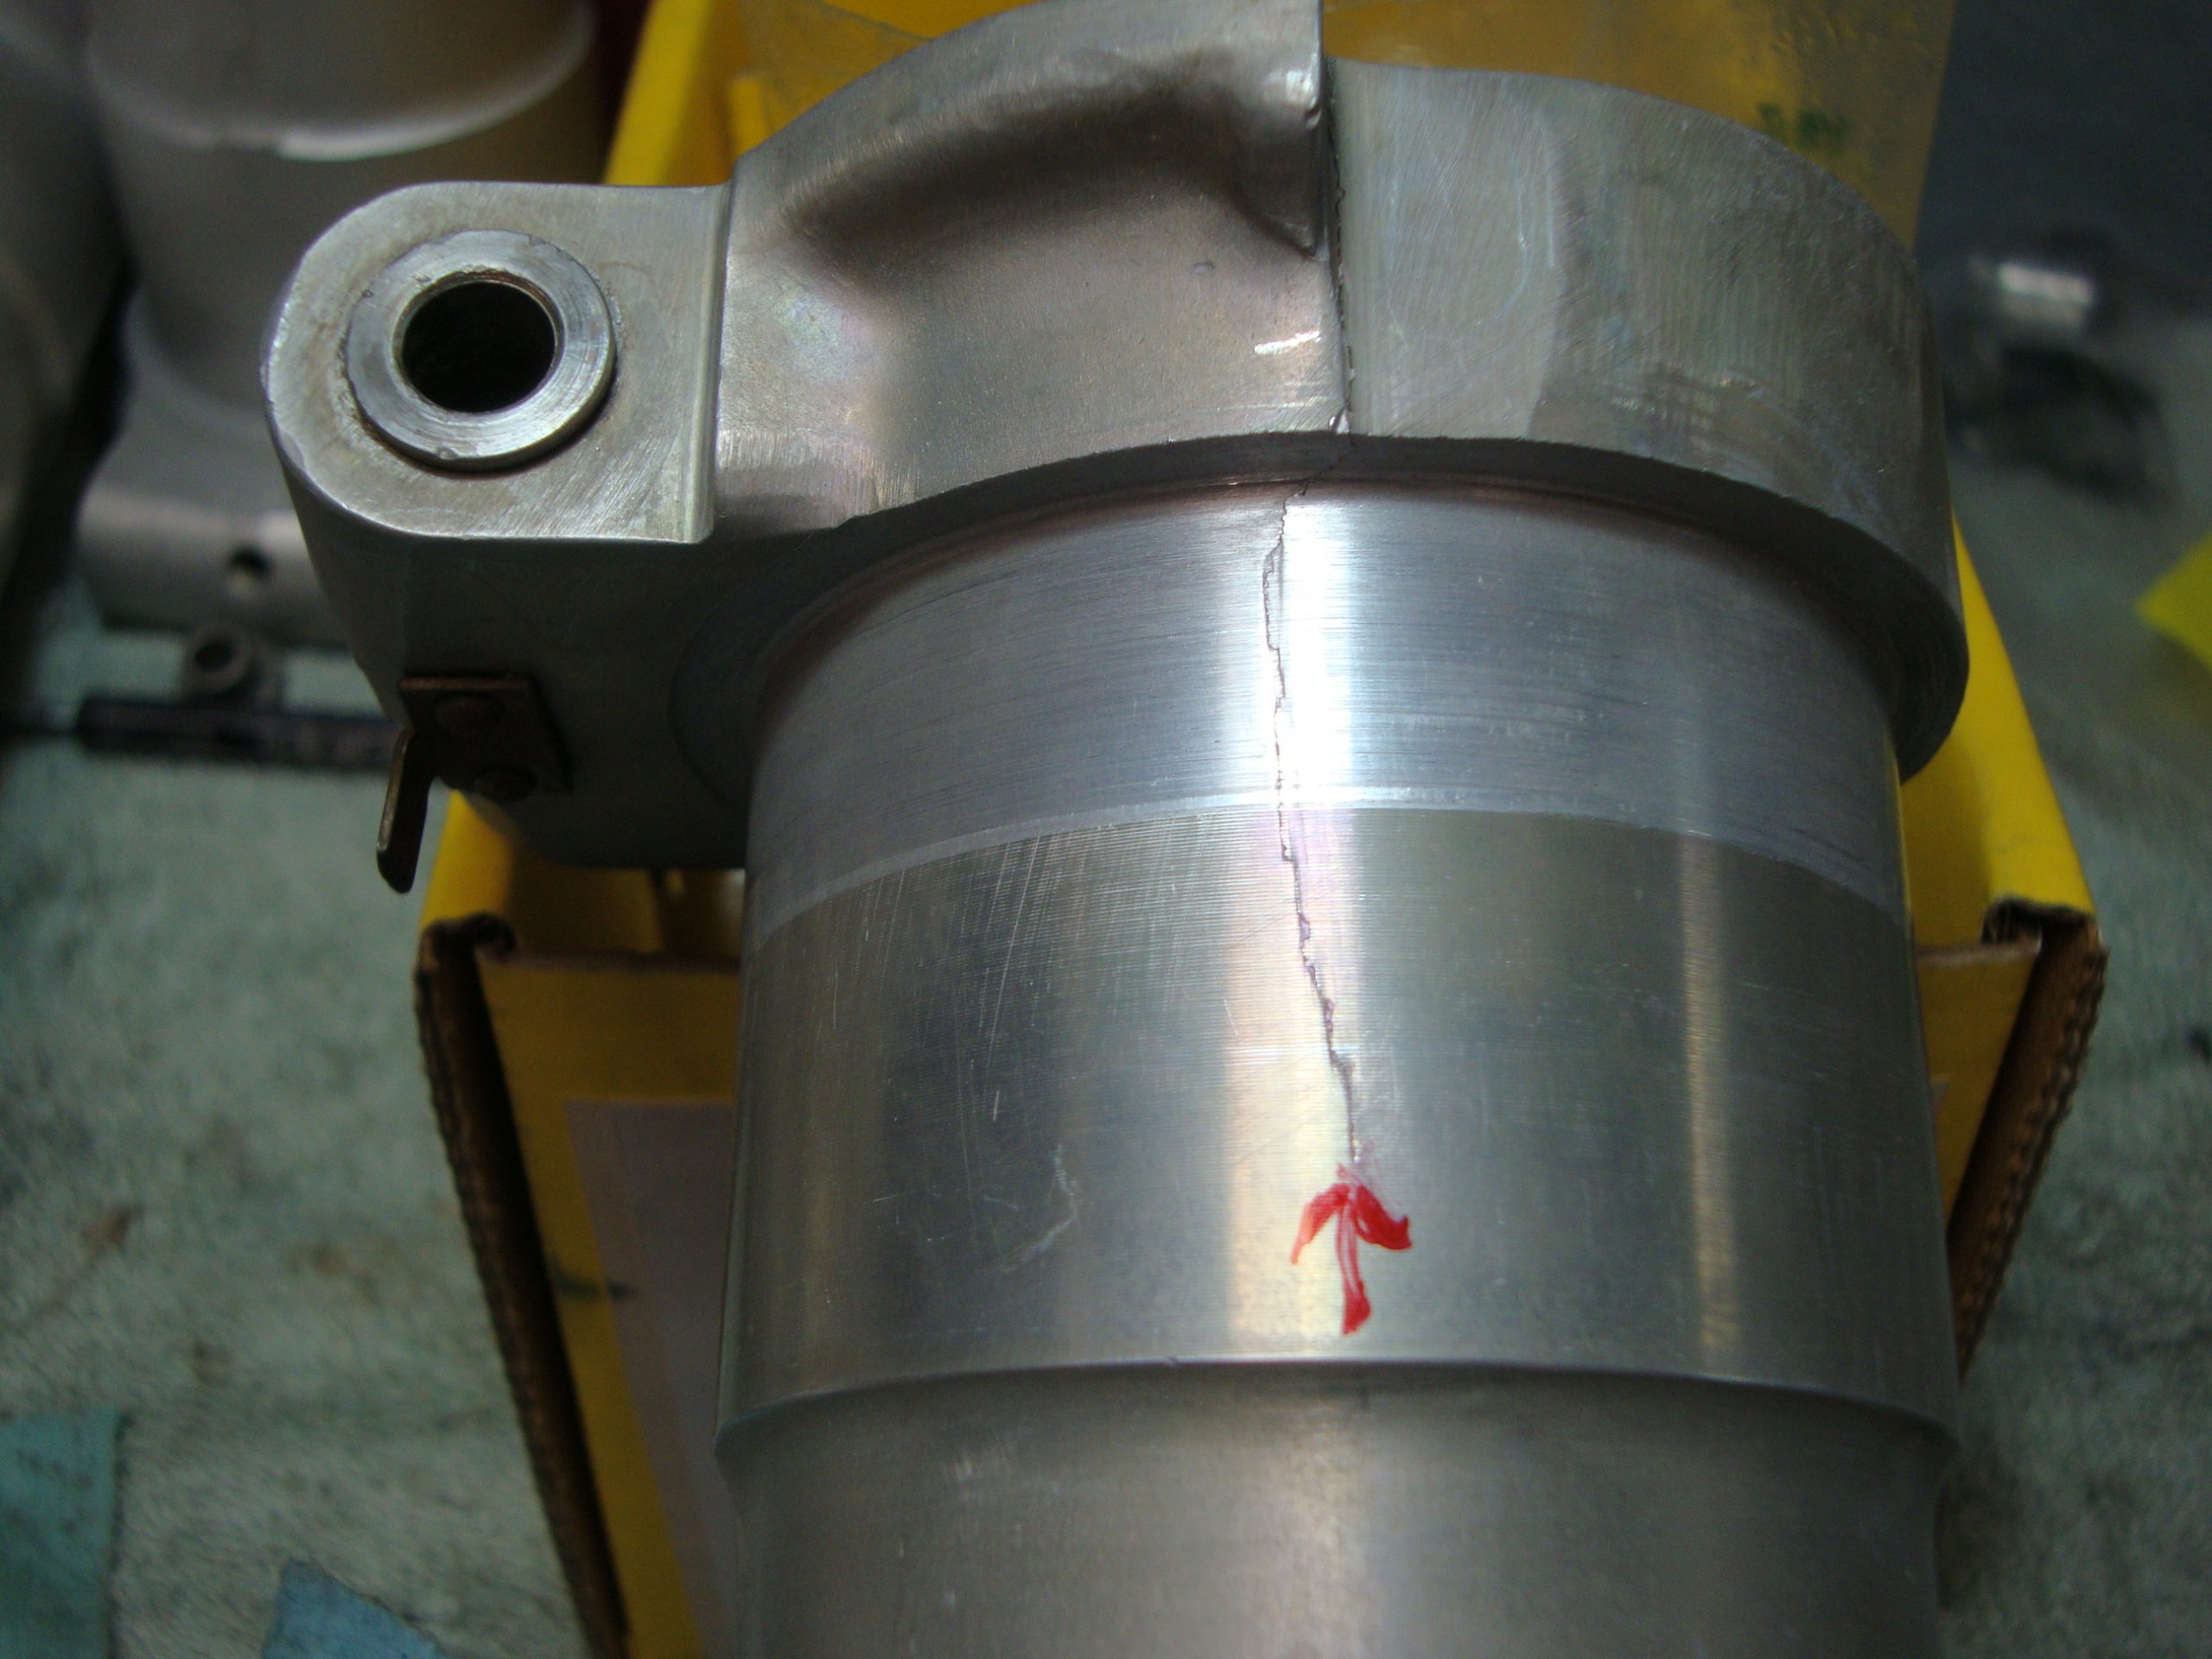 P/N 21707-000 typical cracked tube